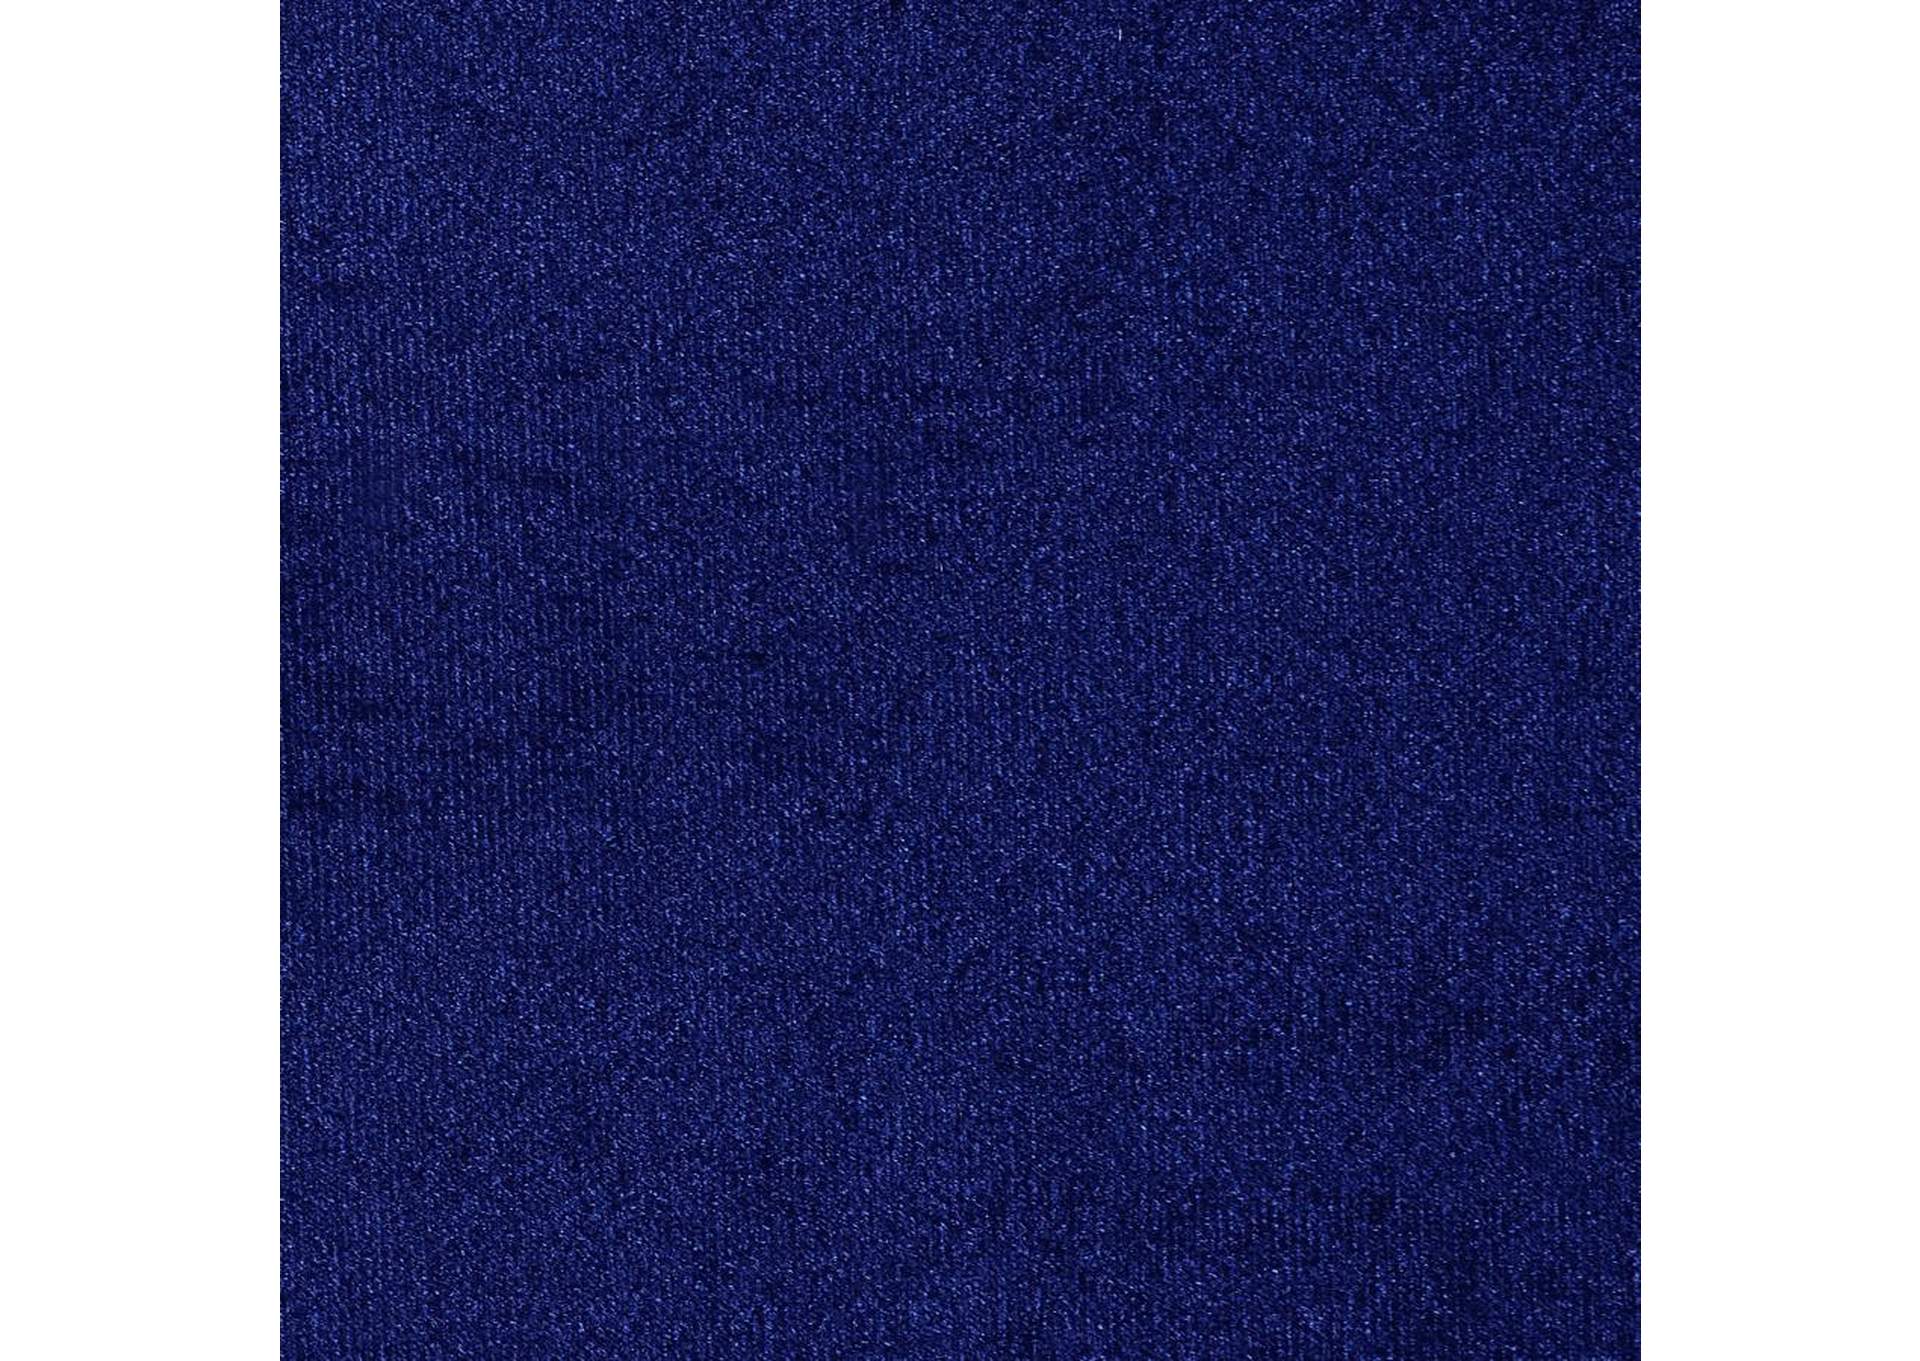 Bleker 3-Piece Tuxedo Arm Living Room Set Blue,Coaster Furniture